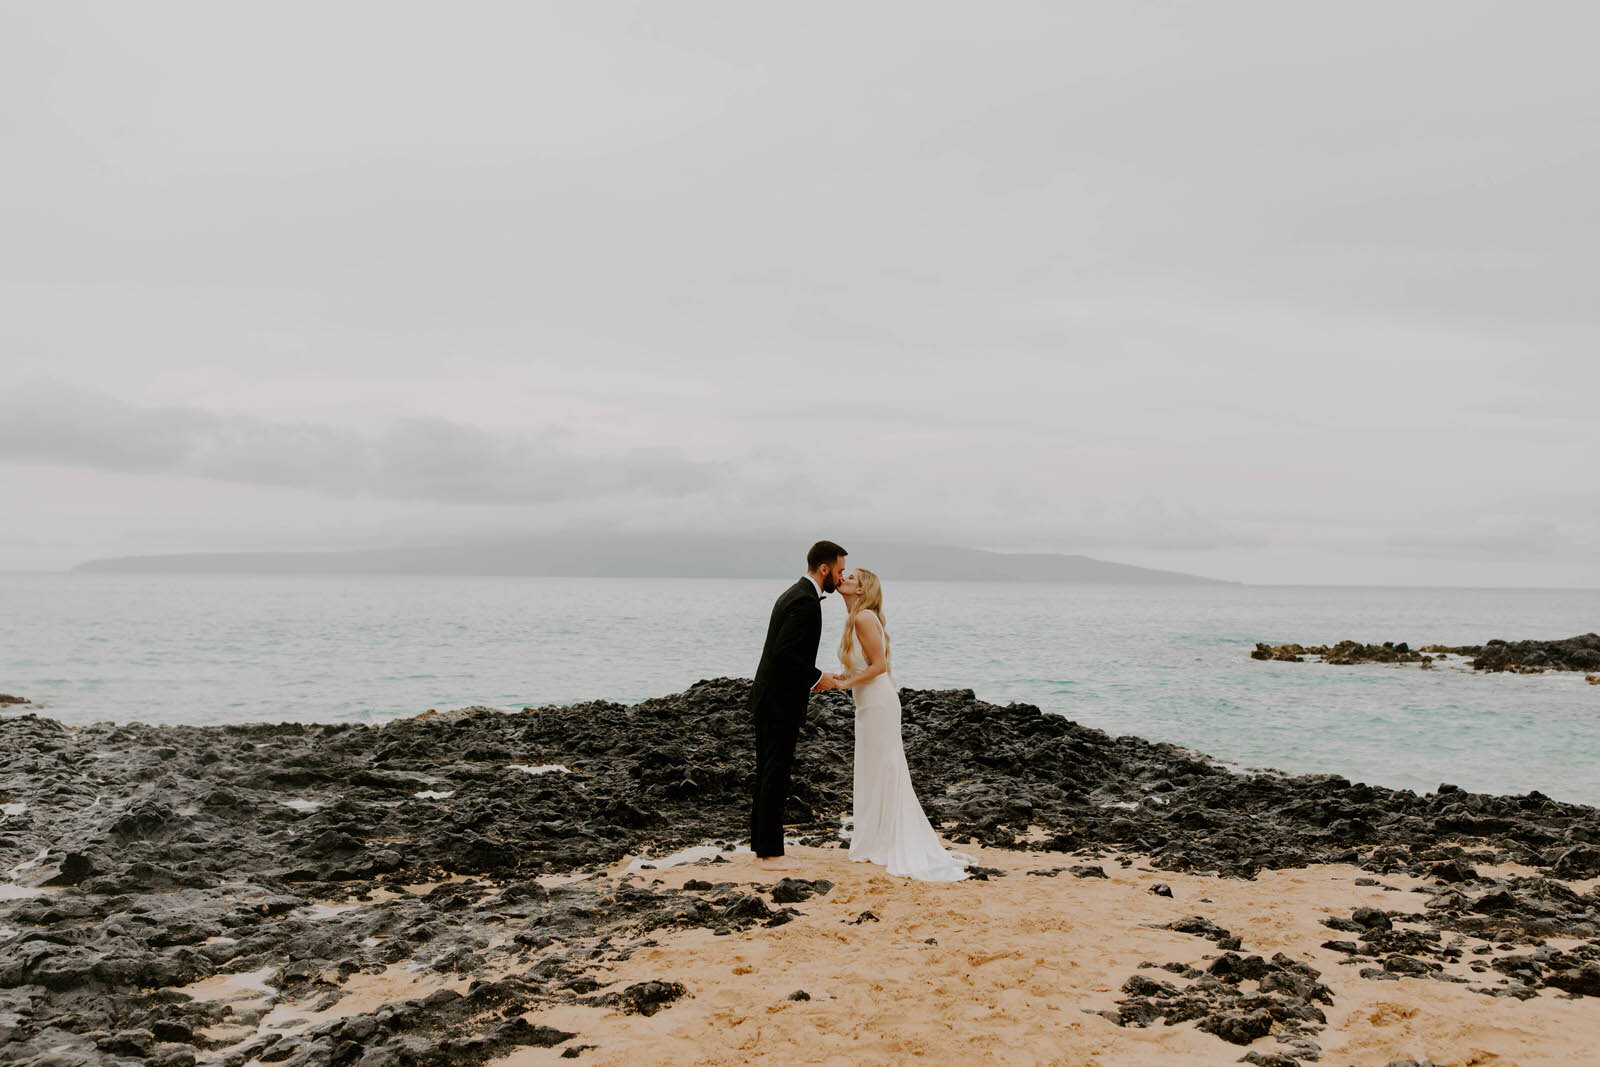 Brianna-Broyles-Photography-Fairmont-Kea-Lani-Wedding-Maui-Photographer-55.jpg